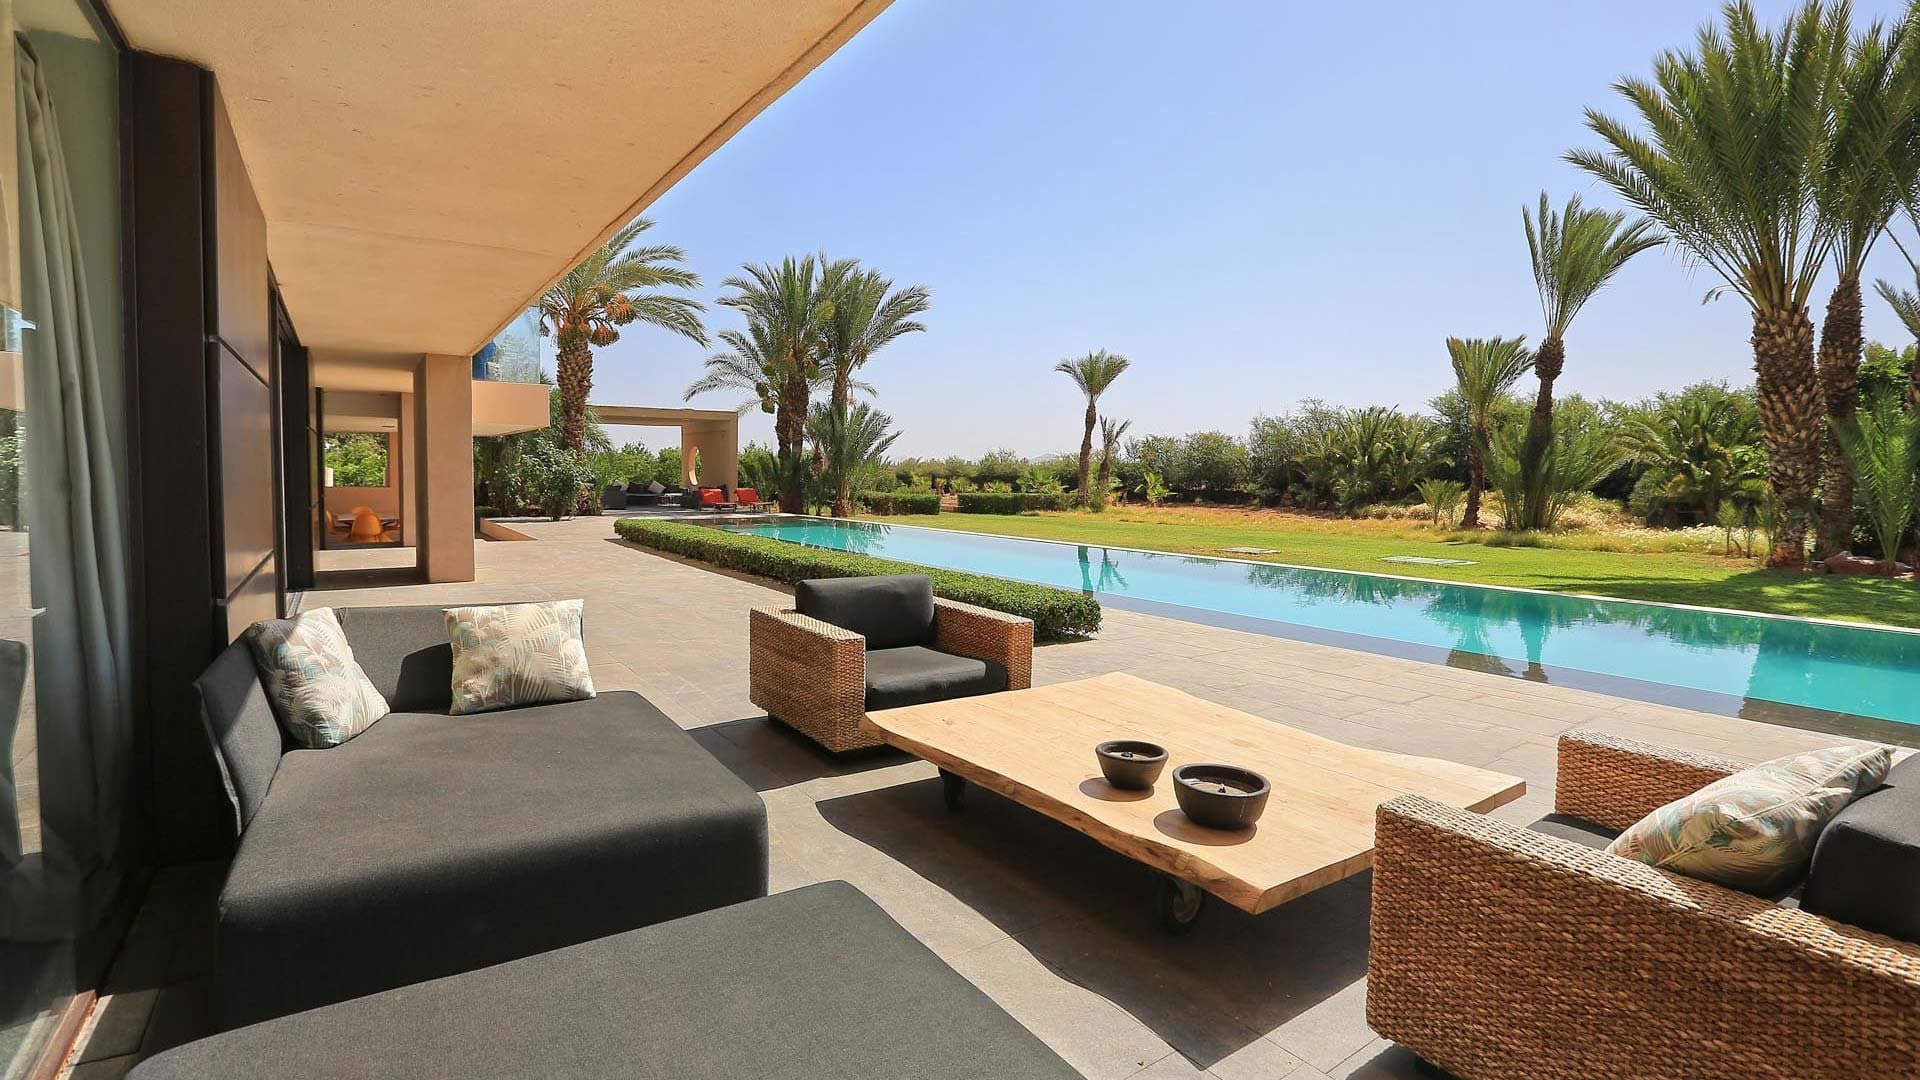 6 Bedroom Villa For Sale Marrakech Lp08713 26b15581d3eb5400.jpg